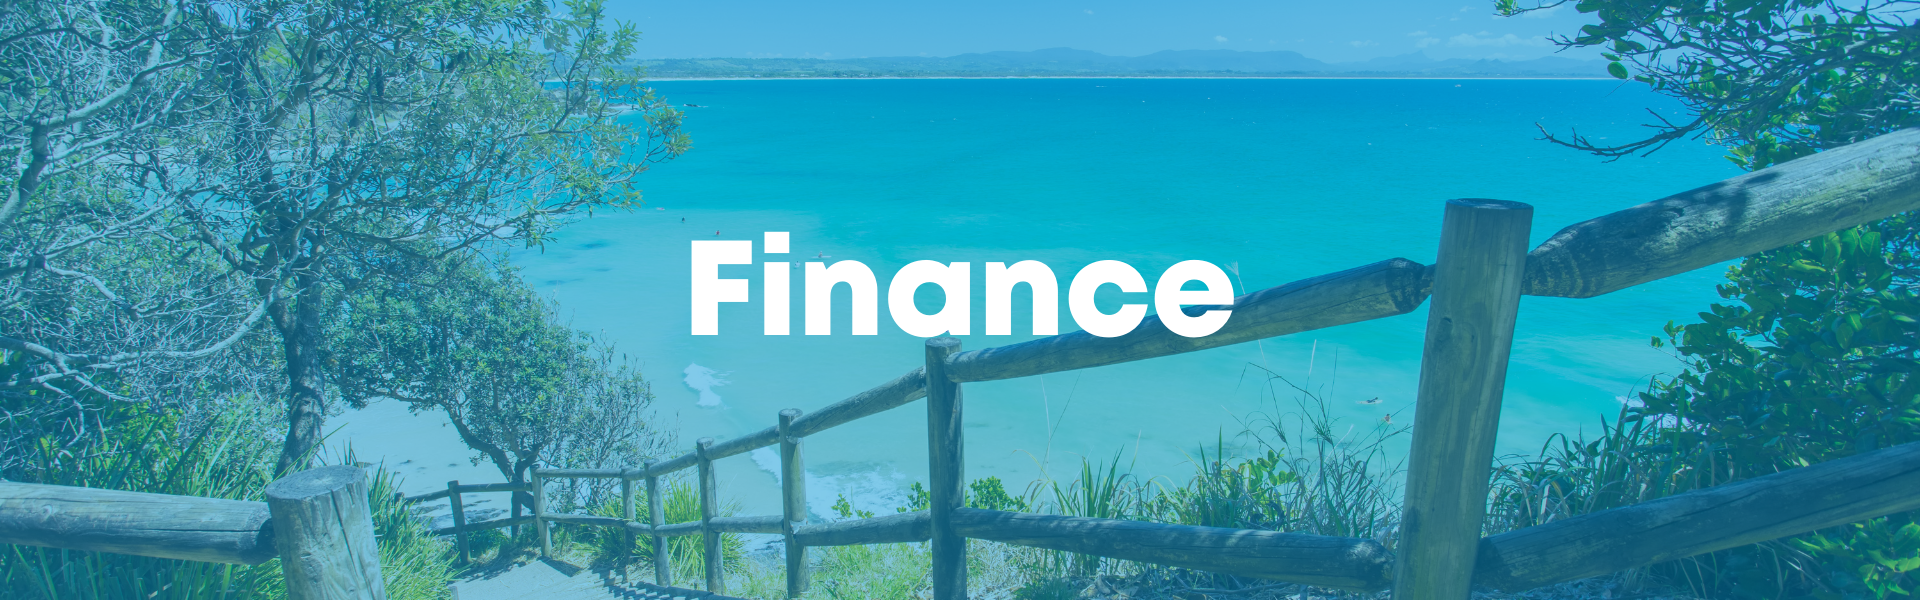 RV Finance, Sydney RV finance, motorhome finance, caravan finance, campervan finance